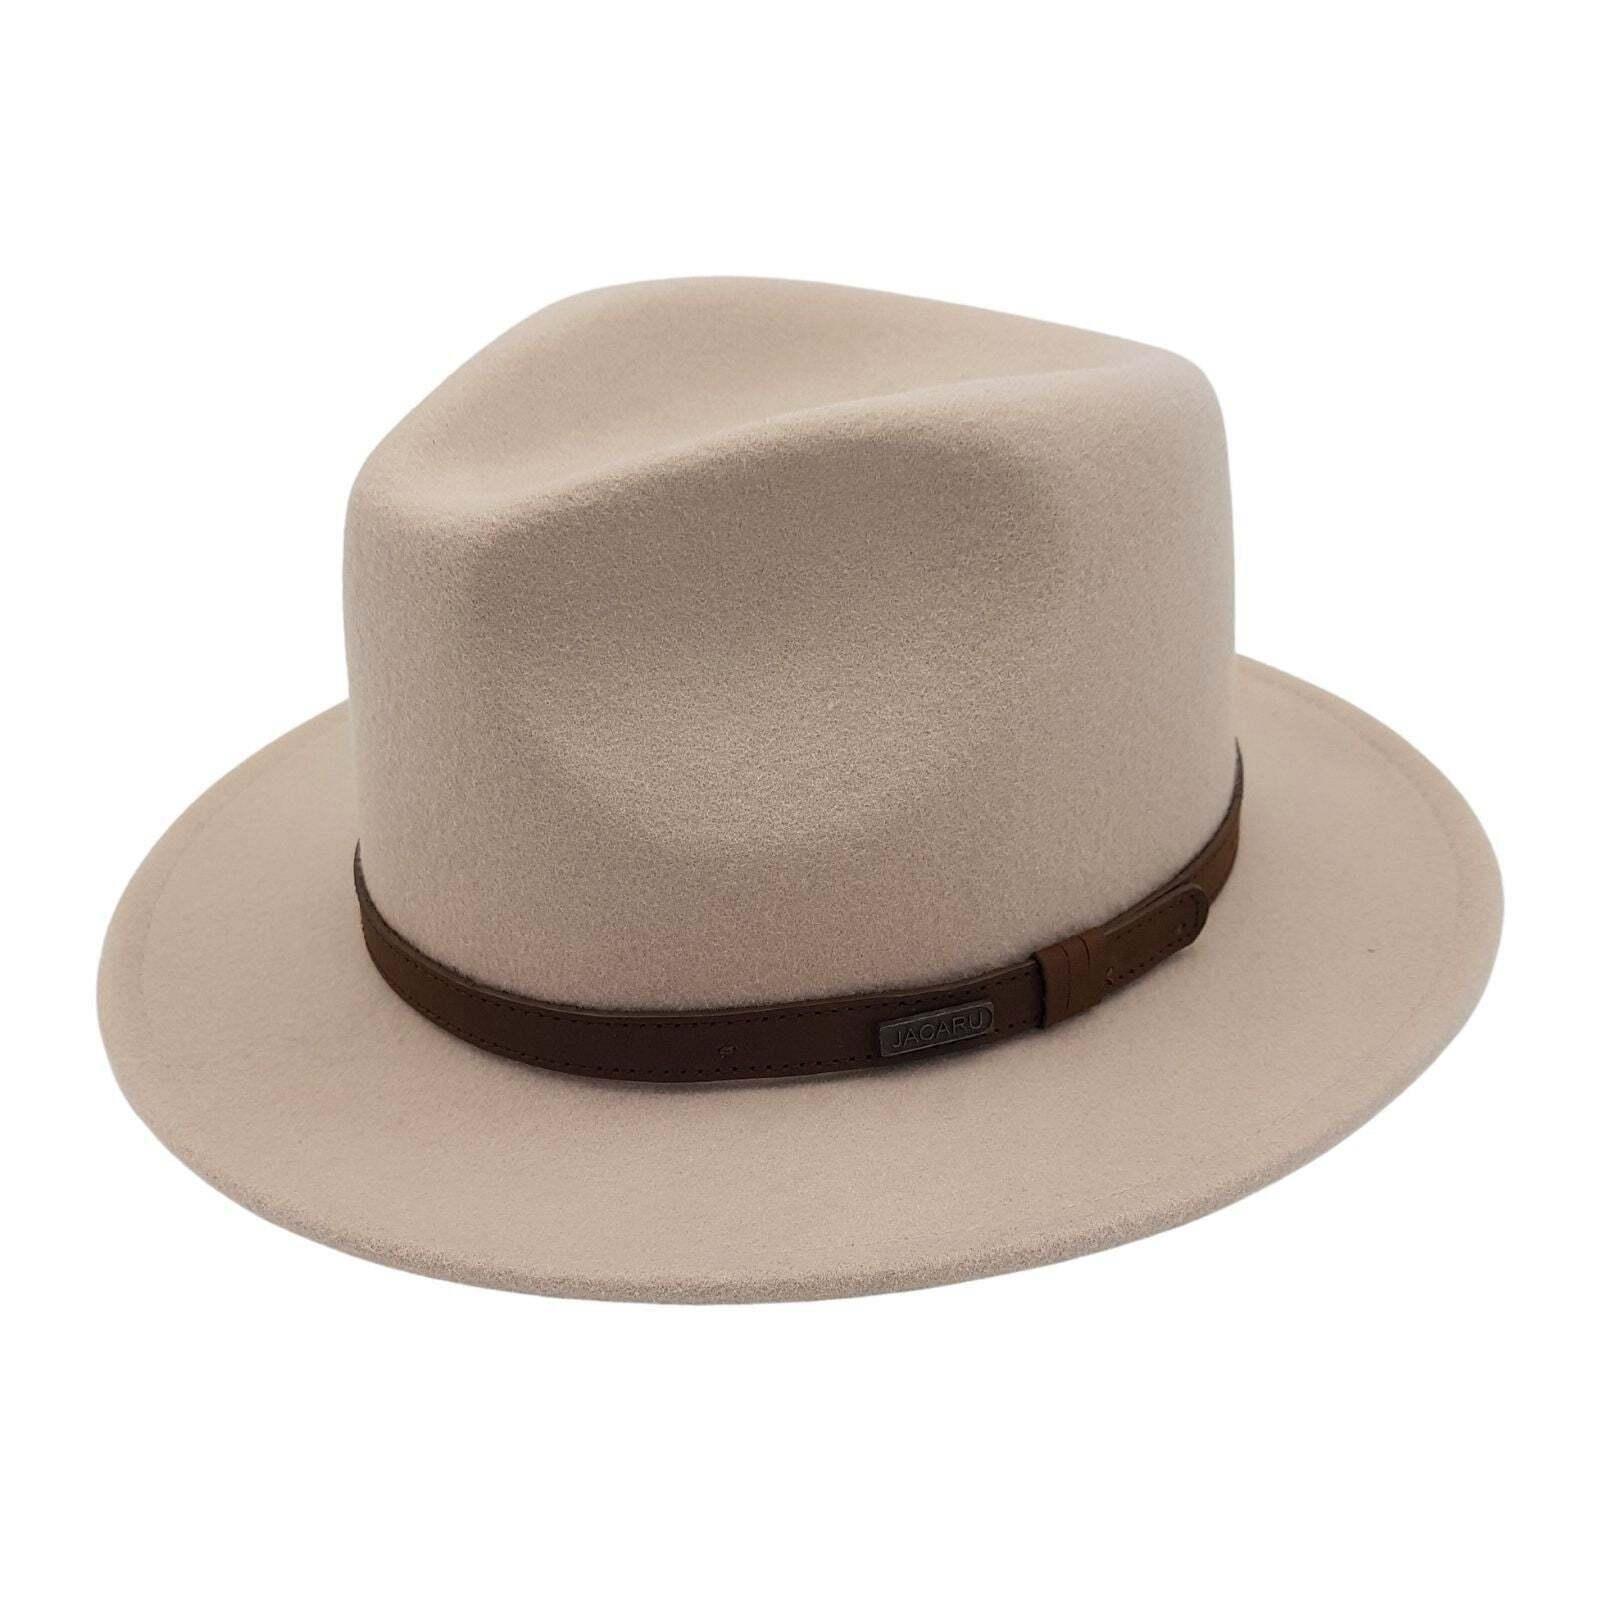 Jacaru 1851 Walkabout Wool Felt Fedora Hat Outback - Cream - Large